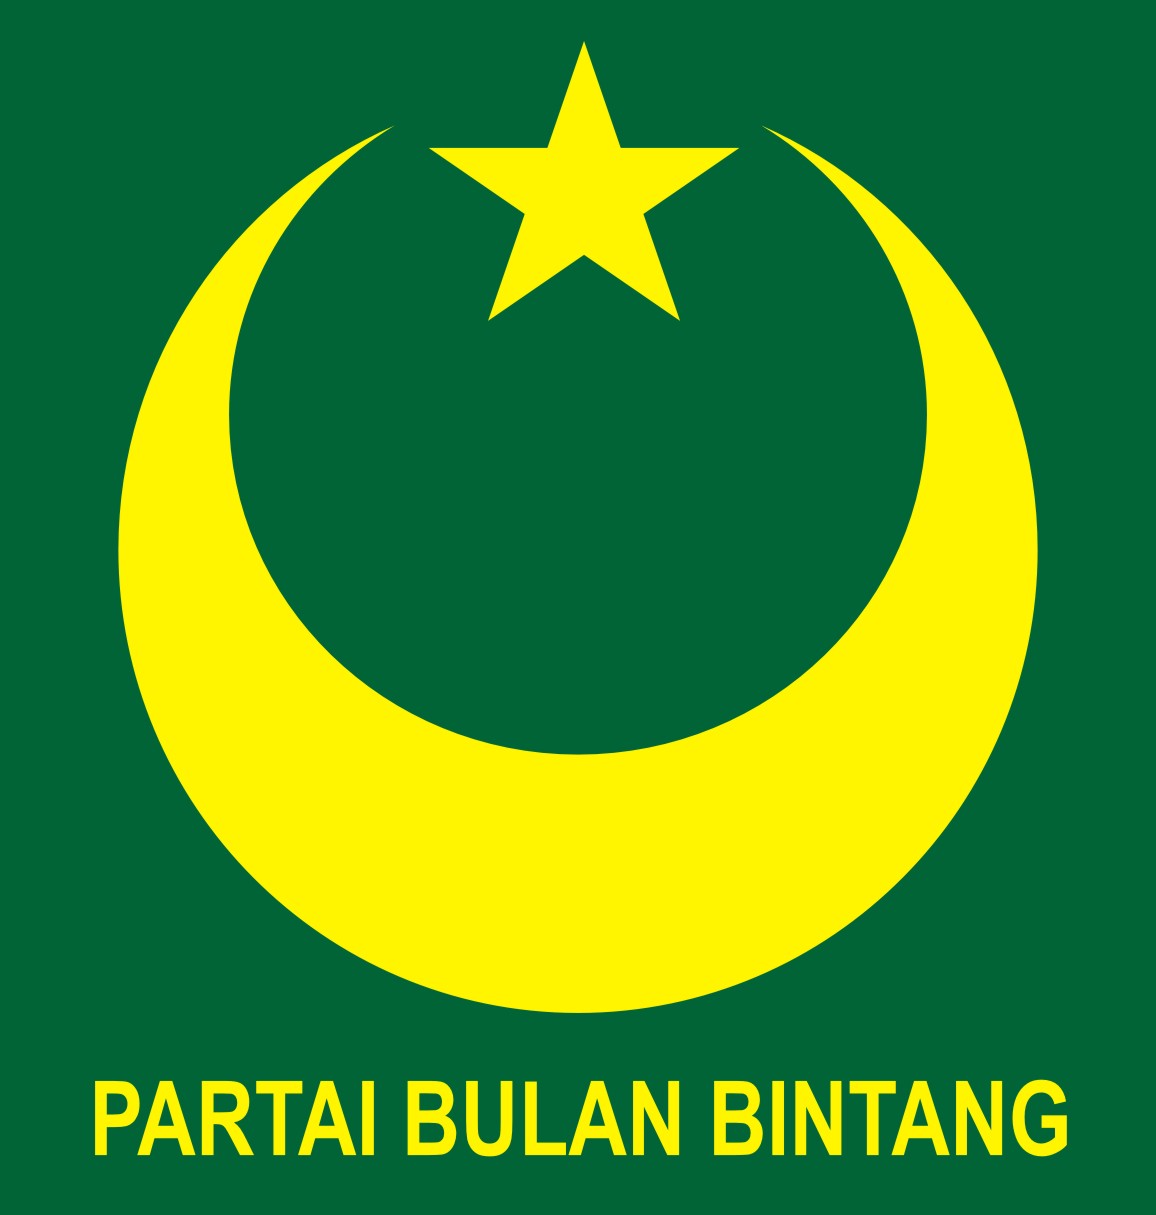  Logo Partai Bulan Bintang PBB vector Download Logo 